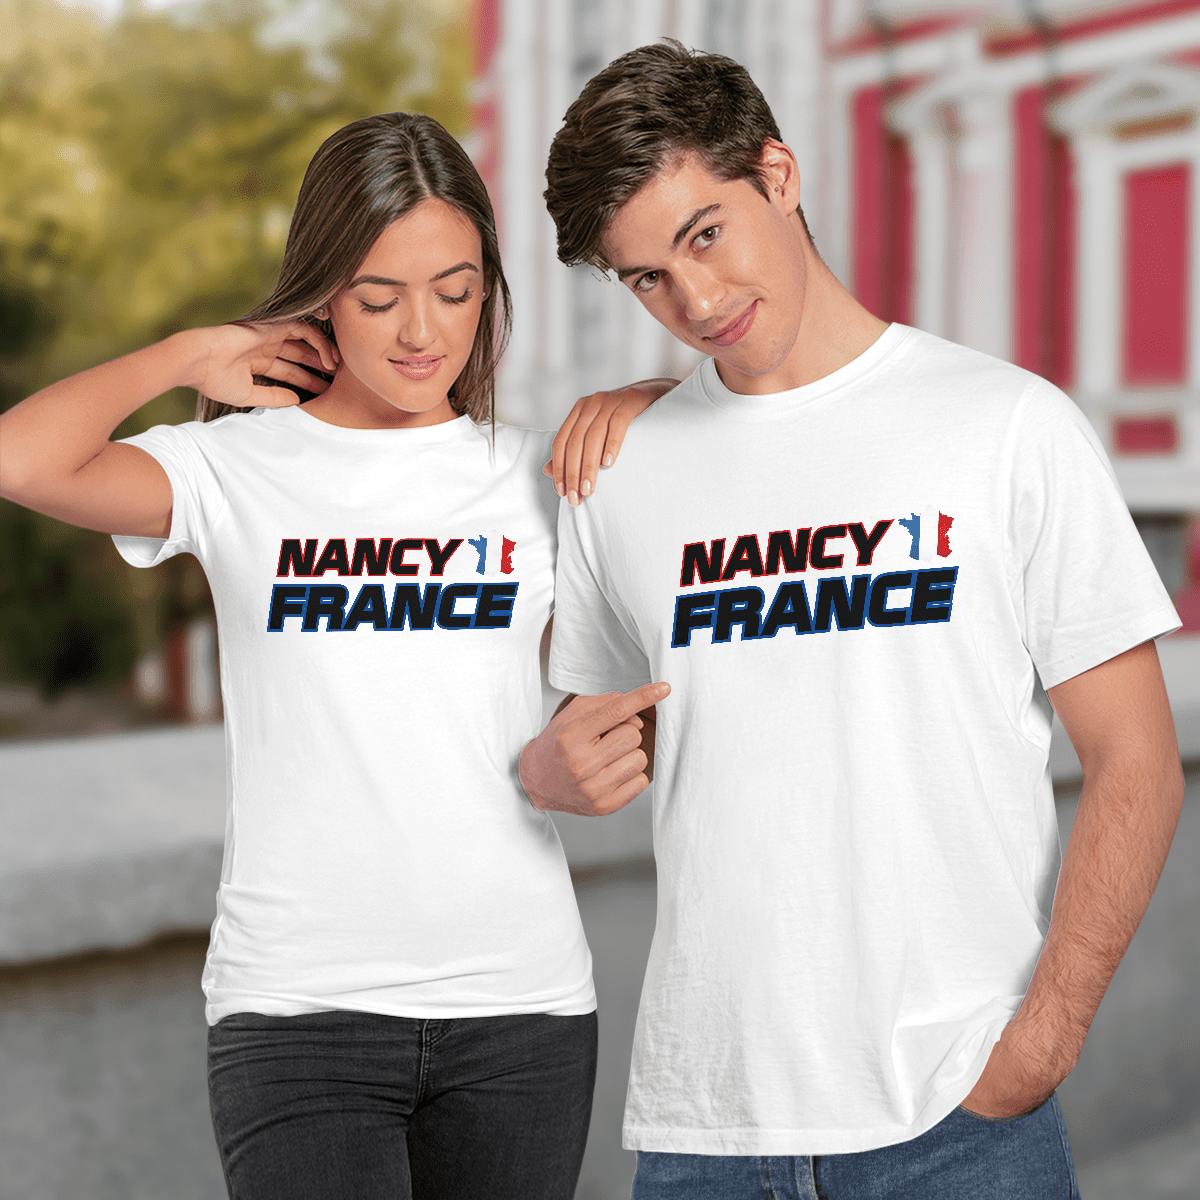 Nancy France shirt